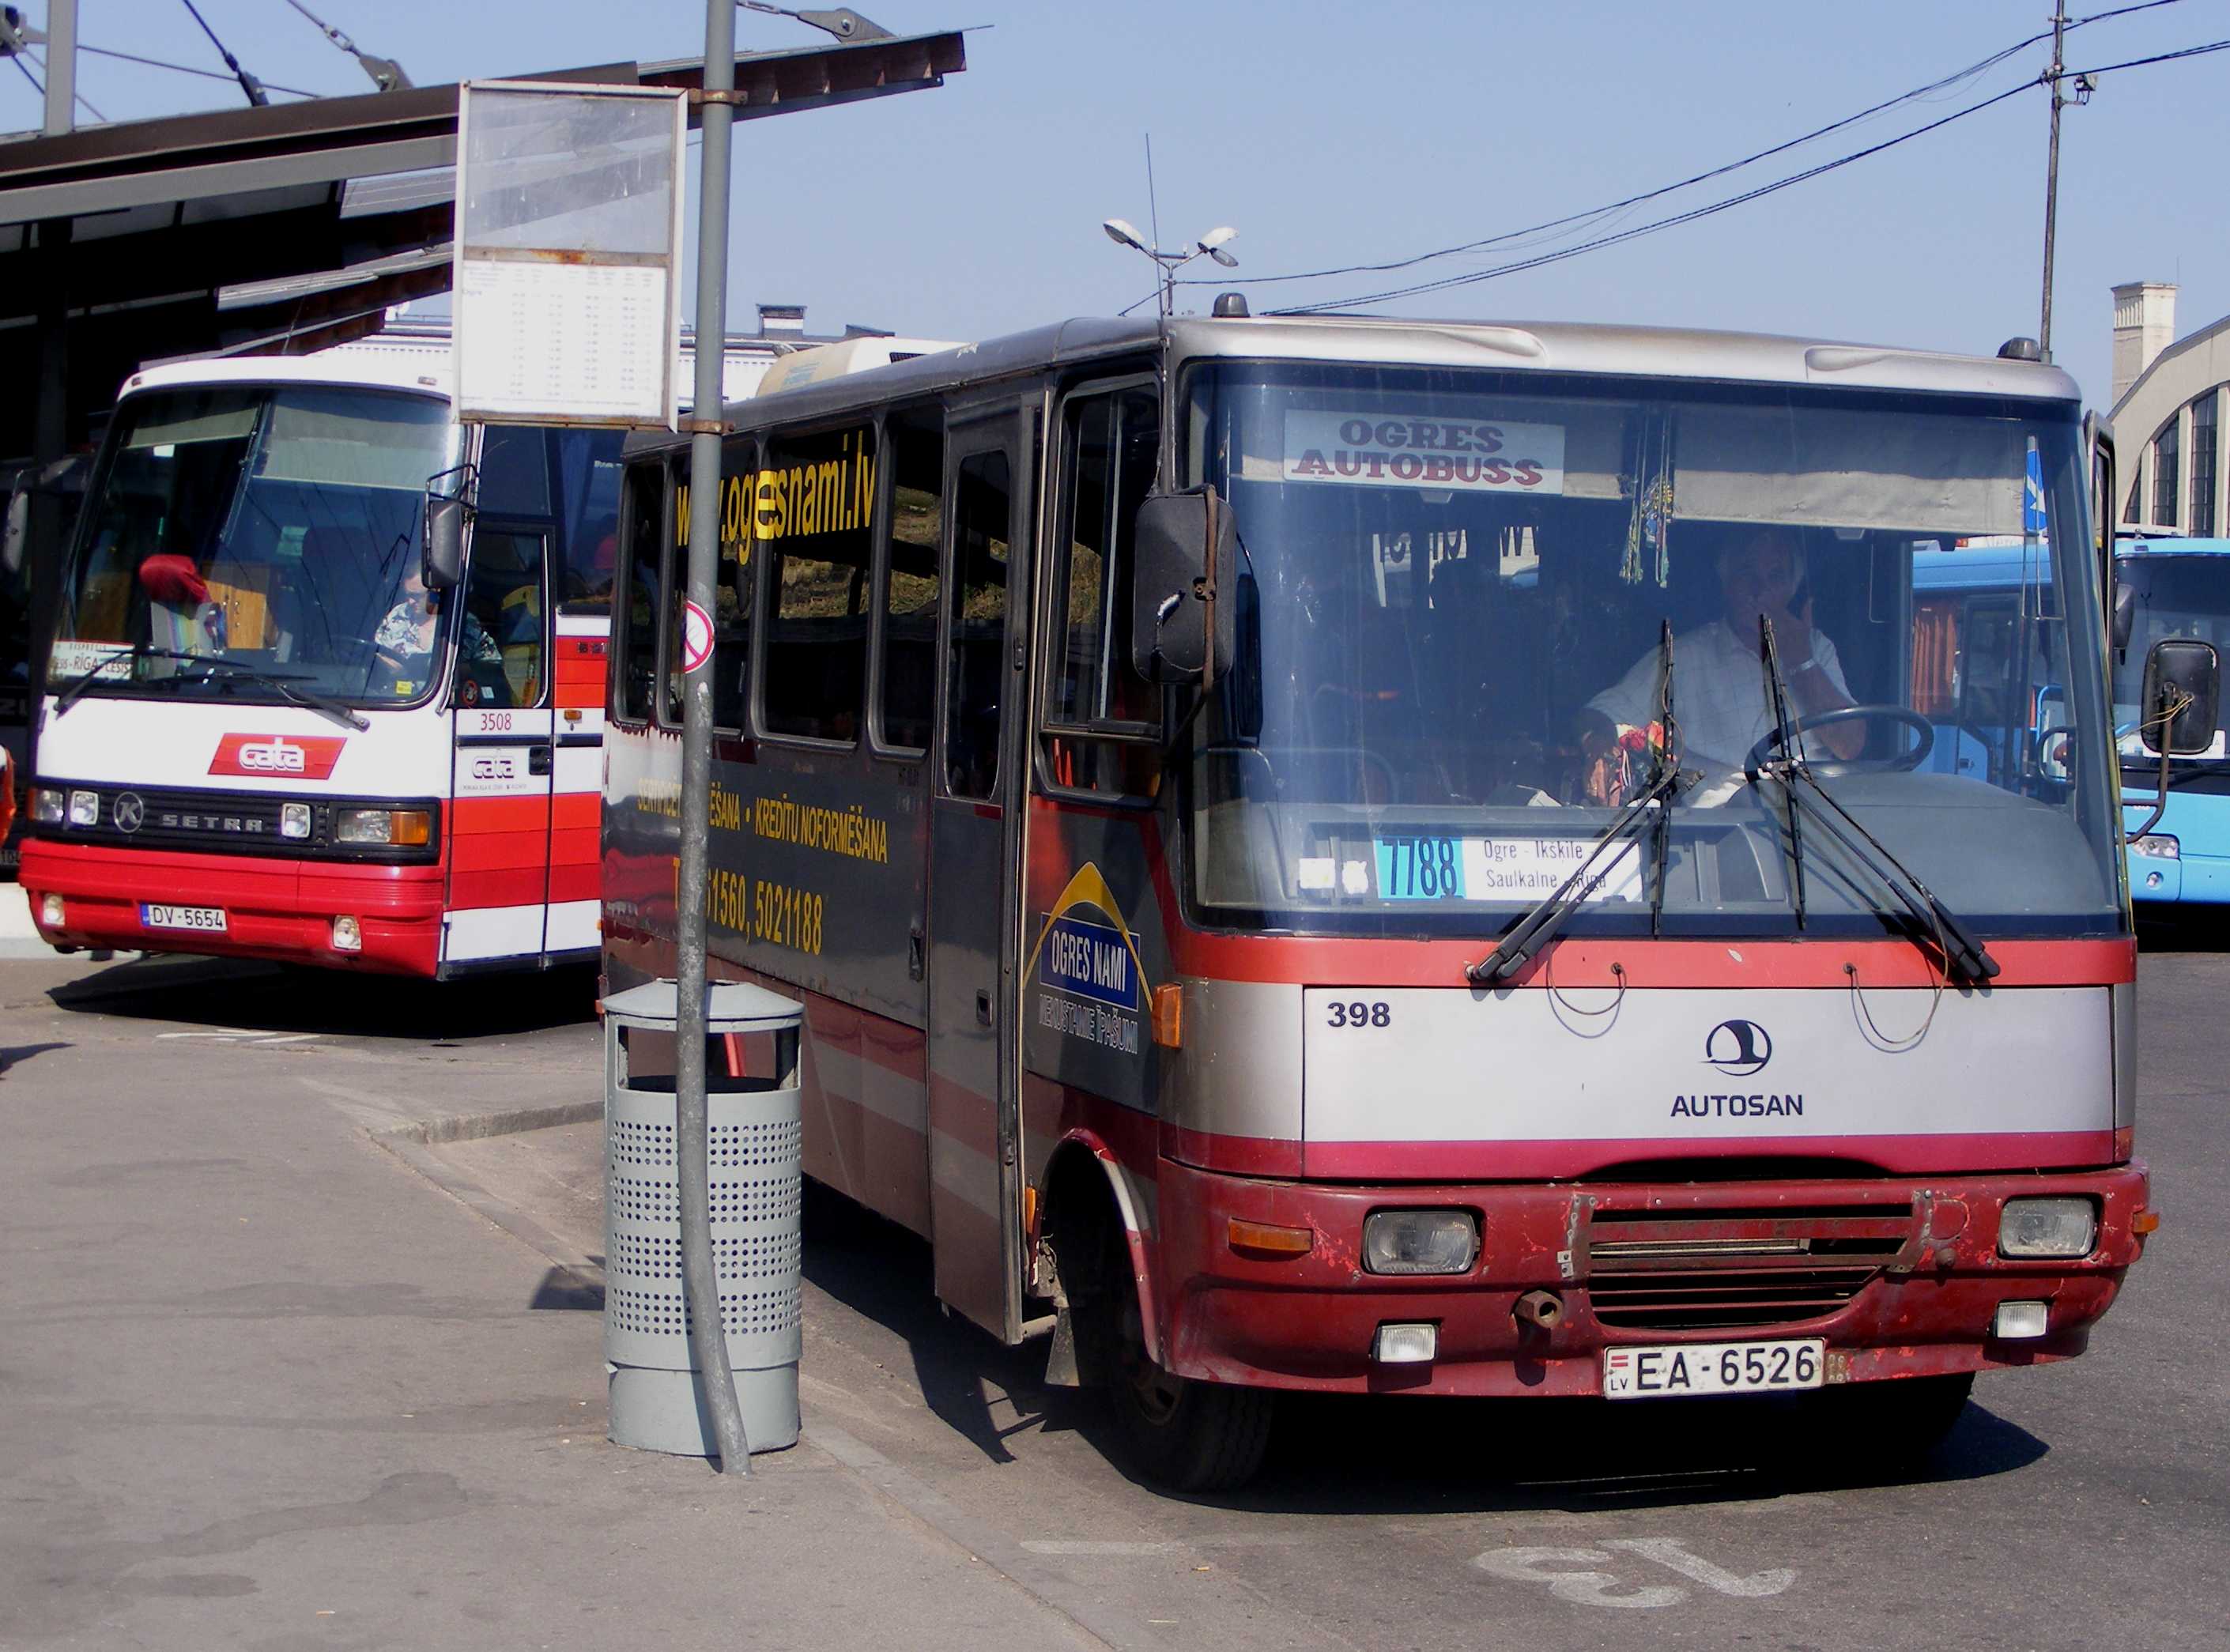 Buses Worldwide: Autosan H7 midibus of Ogres Auto